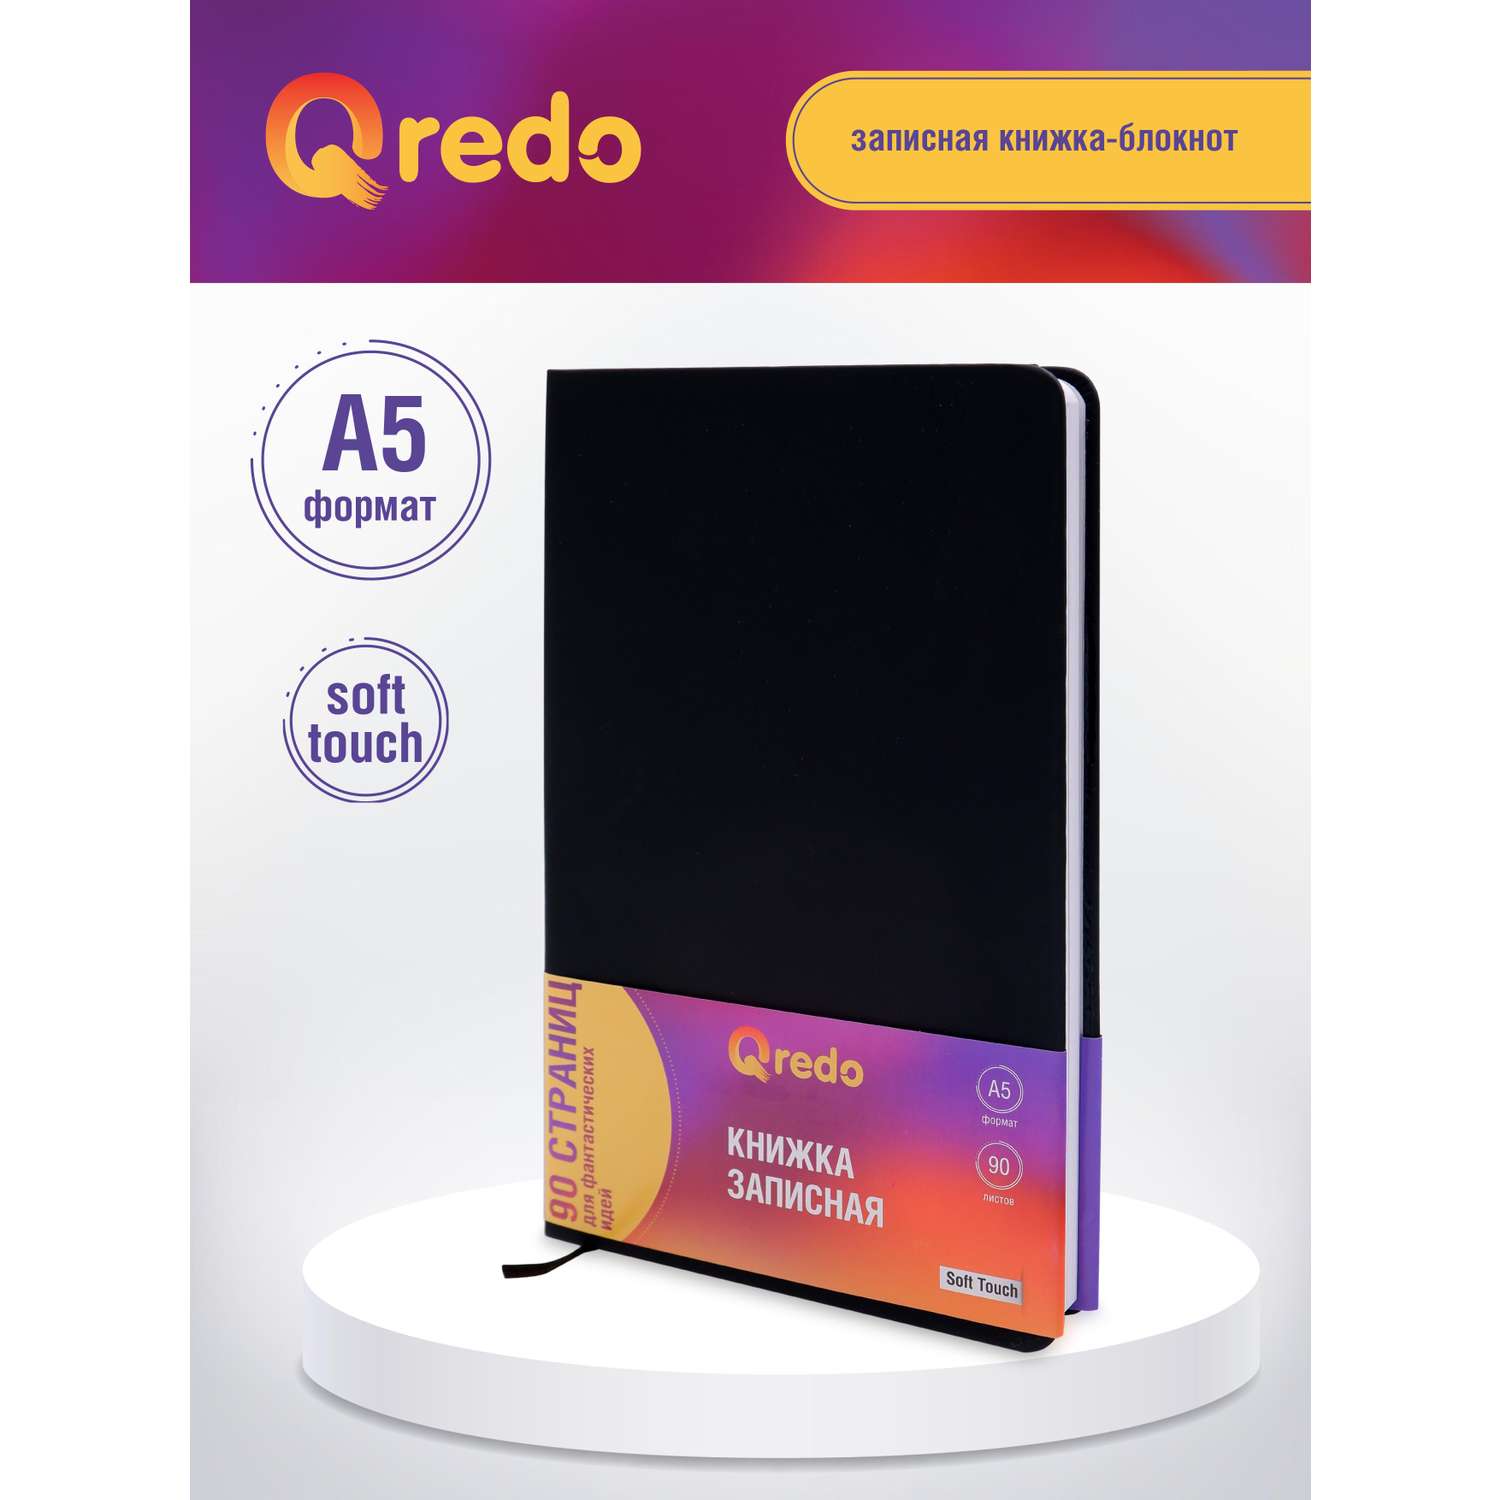 Записная книжка Qredo в клетку А5 90л Qredo черная обложка soft touch на резинке - фото 1